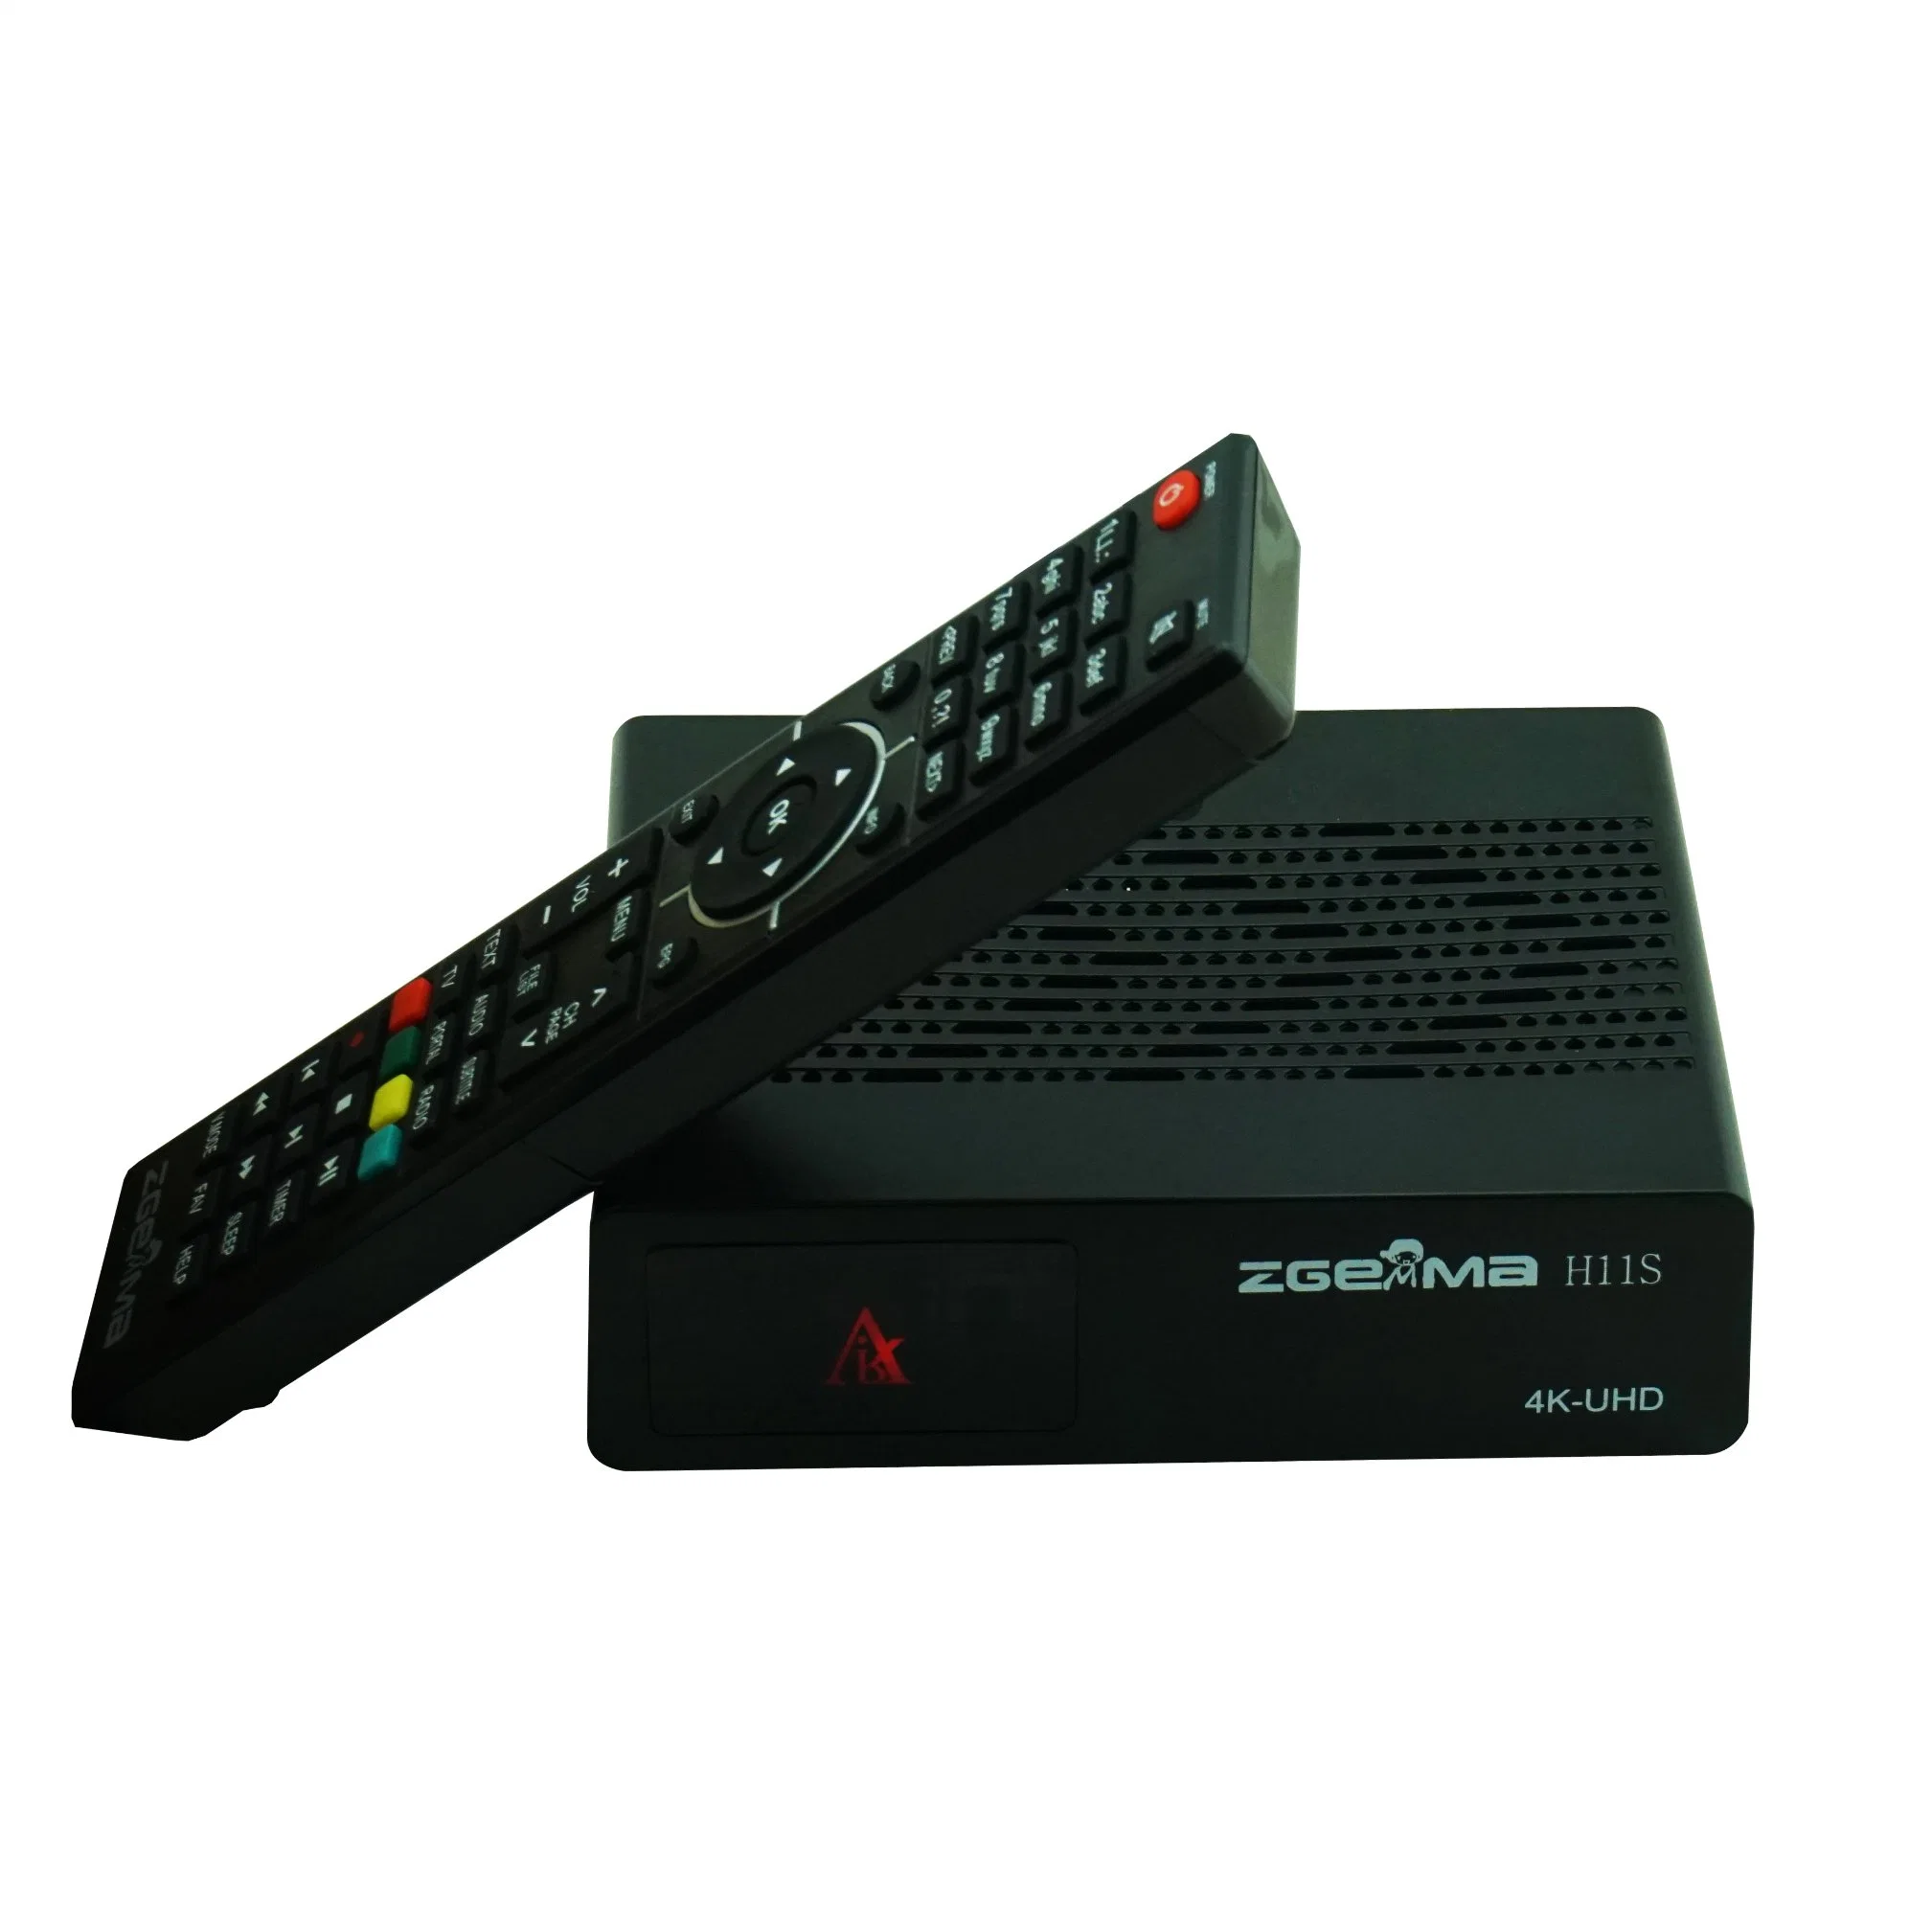 Zgemma H11s 4K UHD Linux DVB-S2X Satellite Receiver